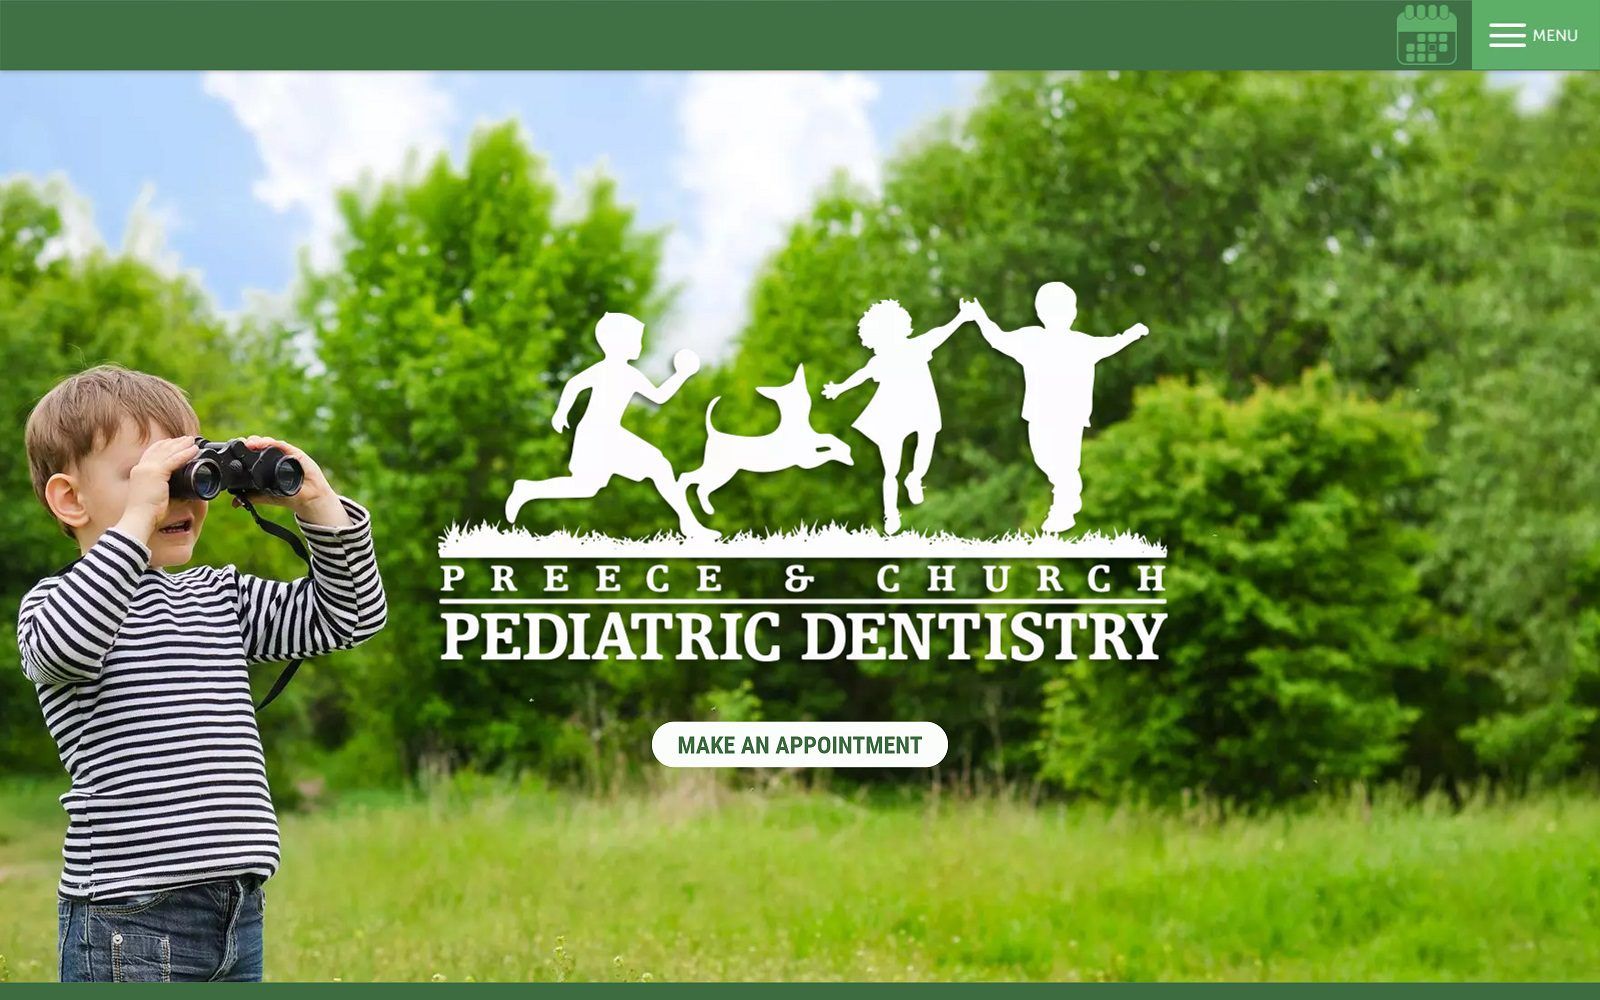 The screenshot of preece and church pediatric dentistry website